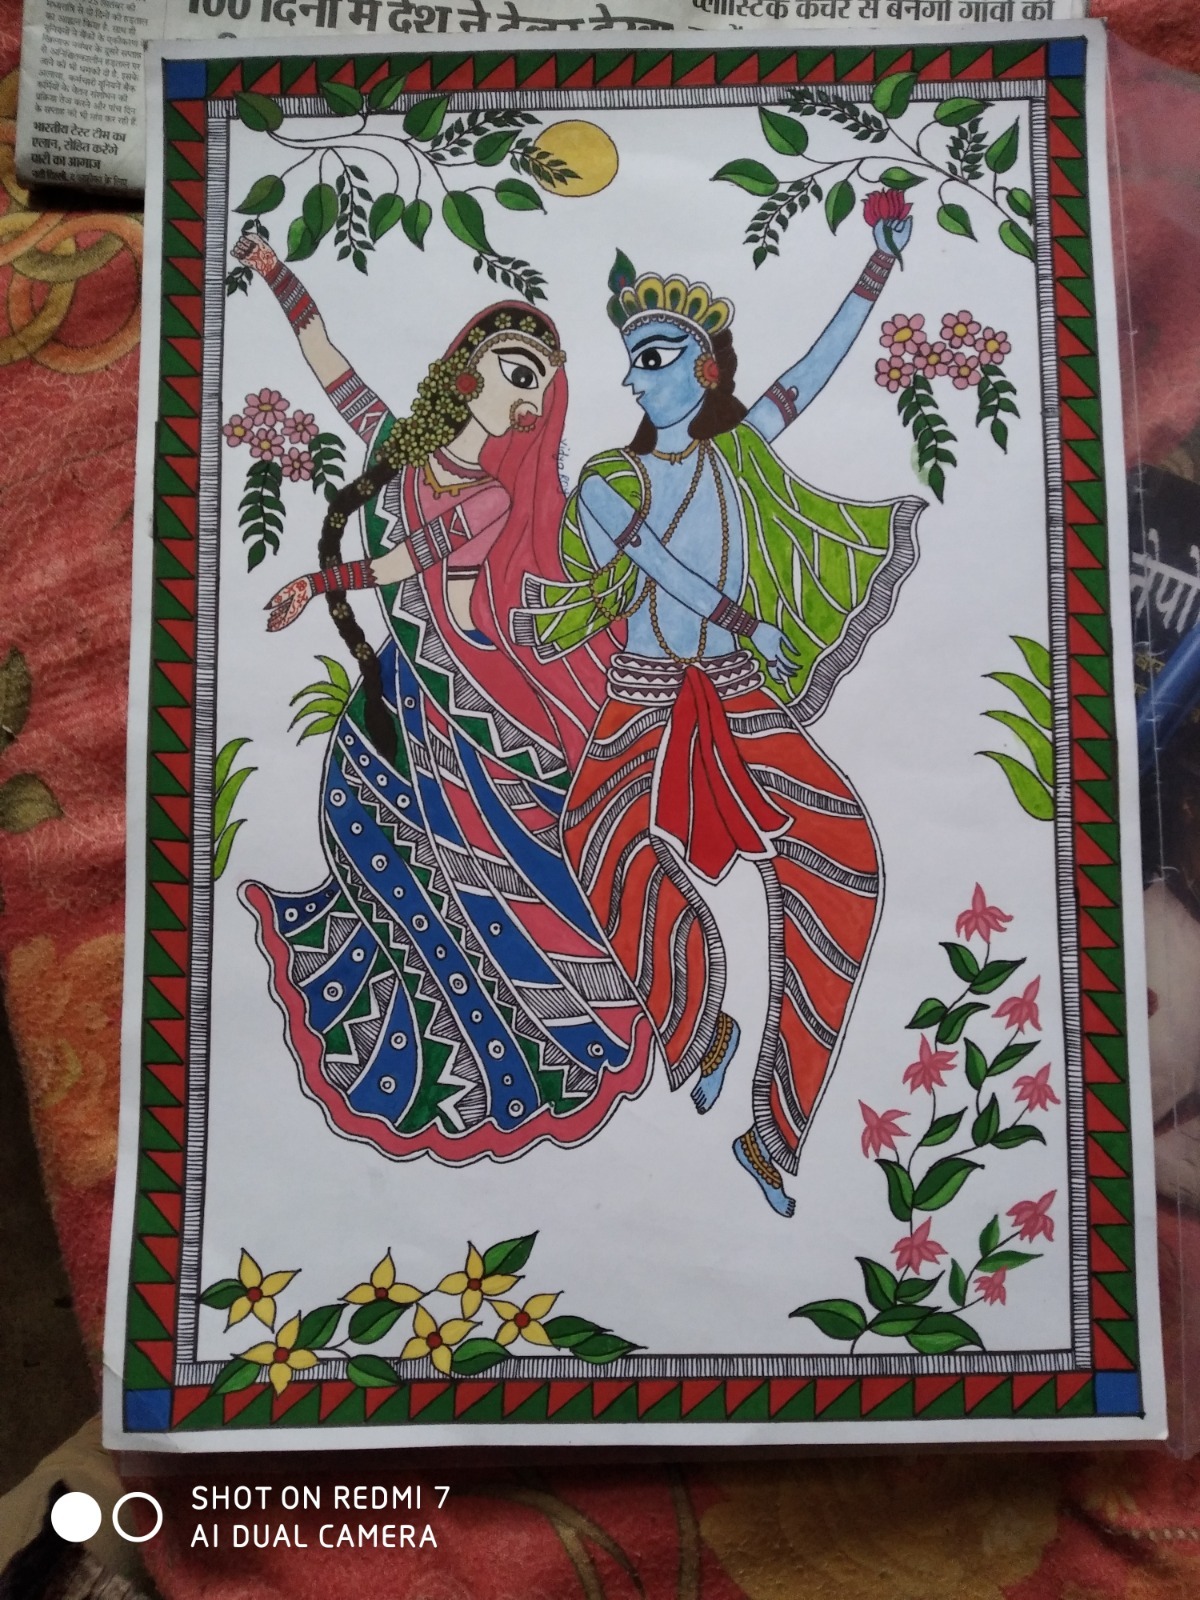 a painting of lord Krishna and Goddess Radha